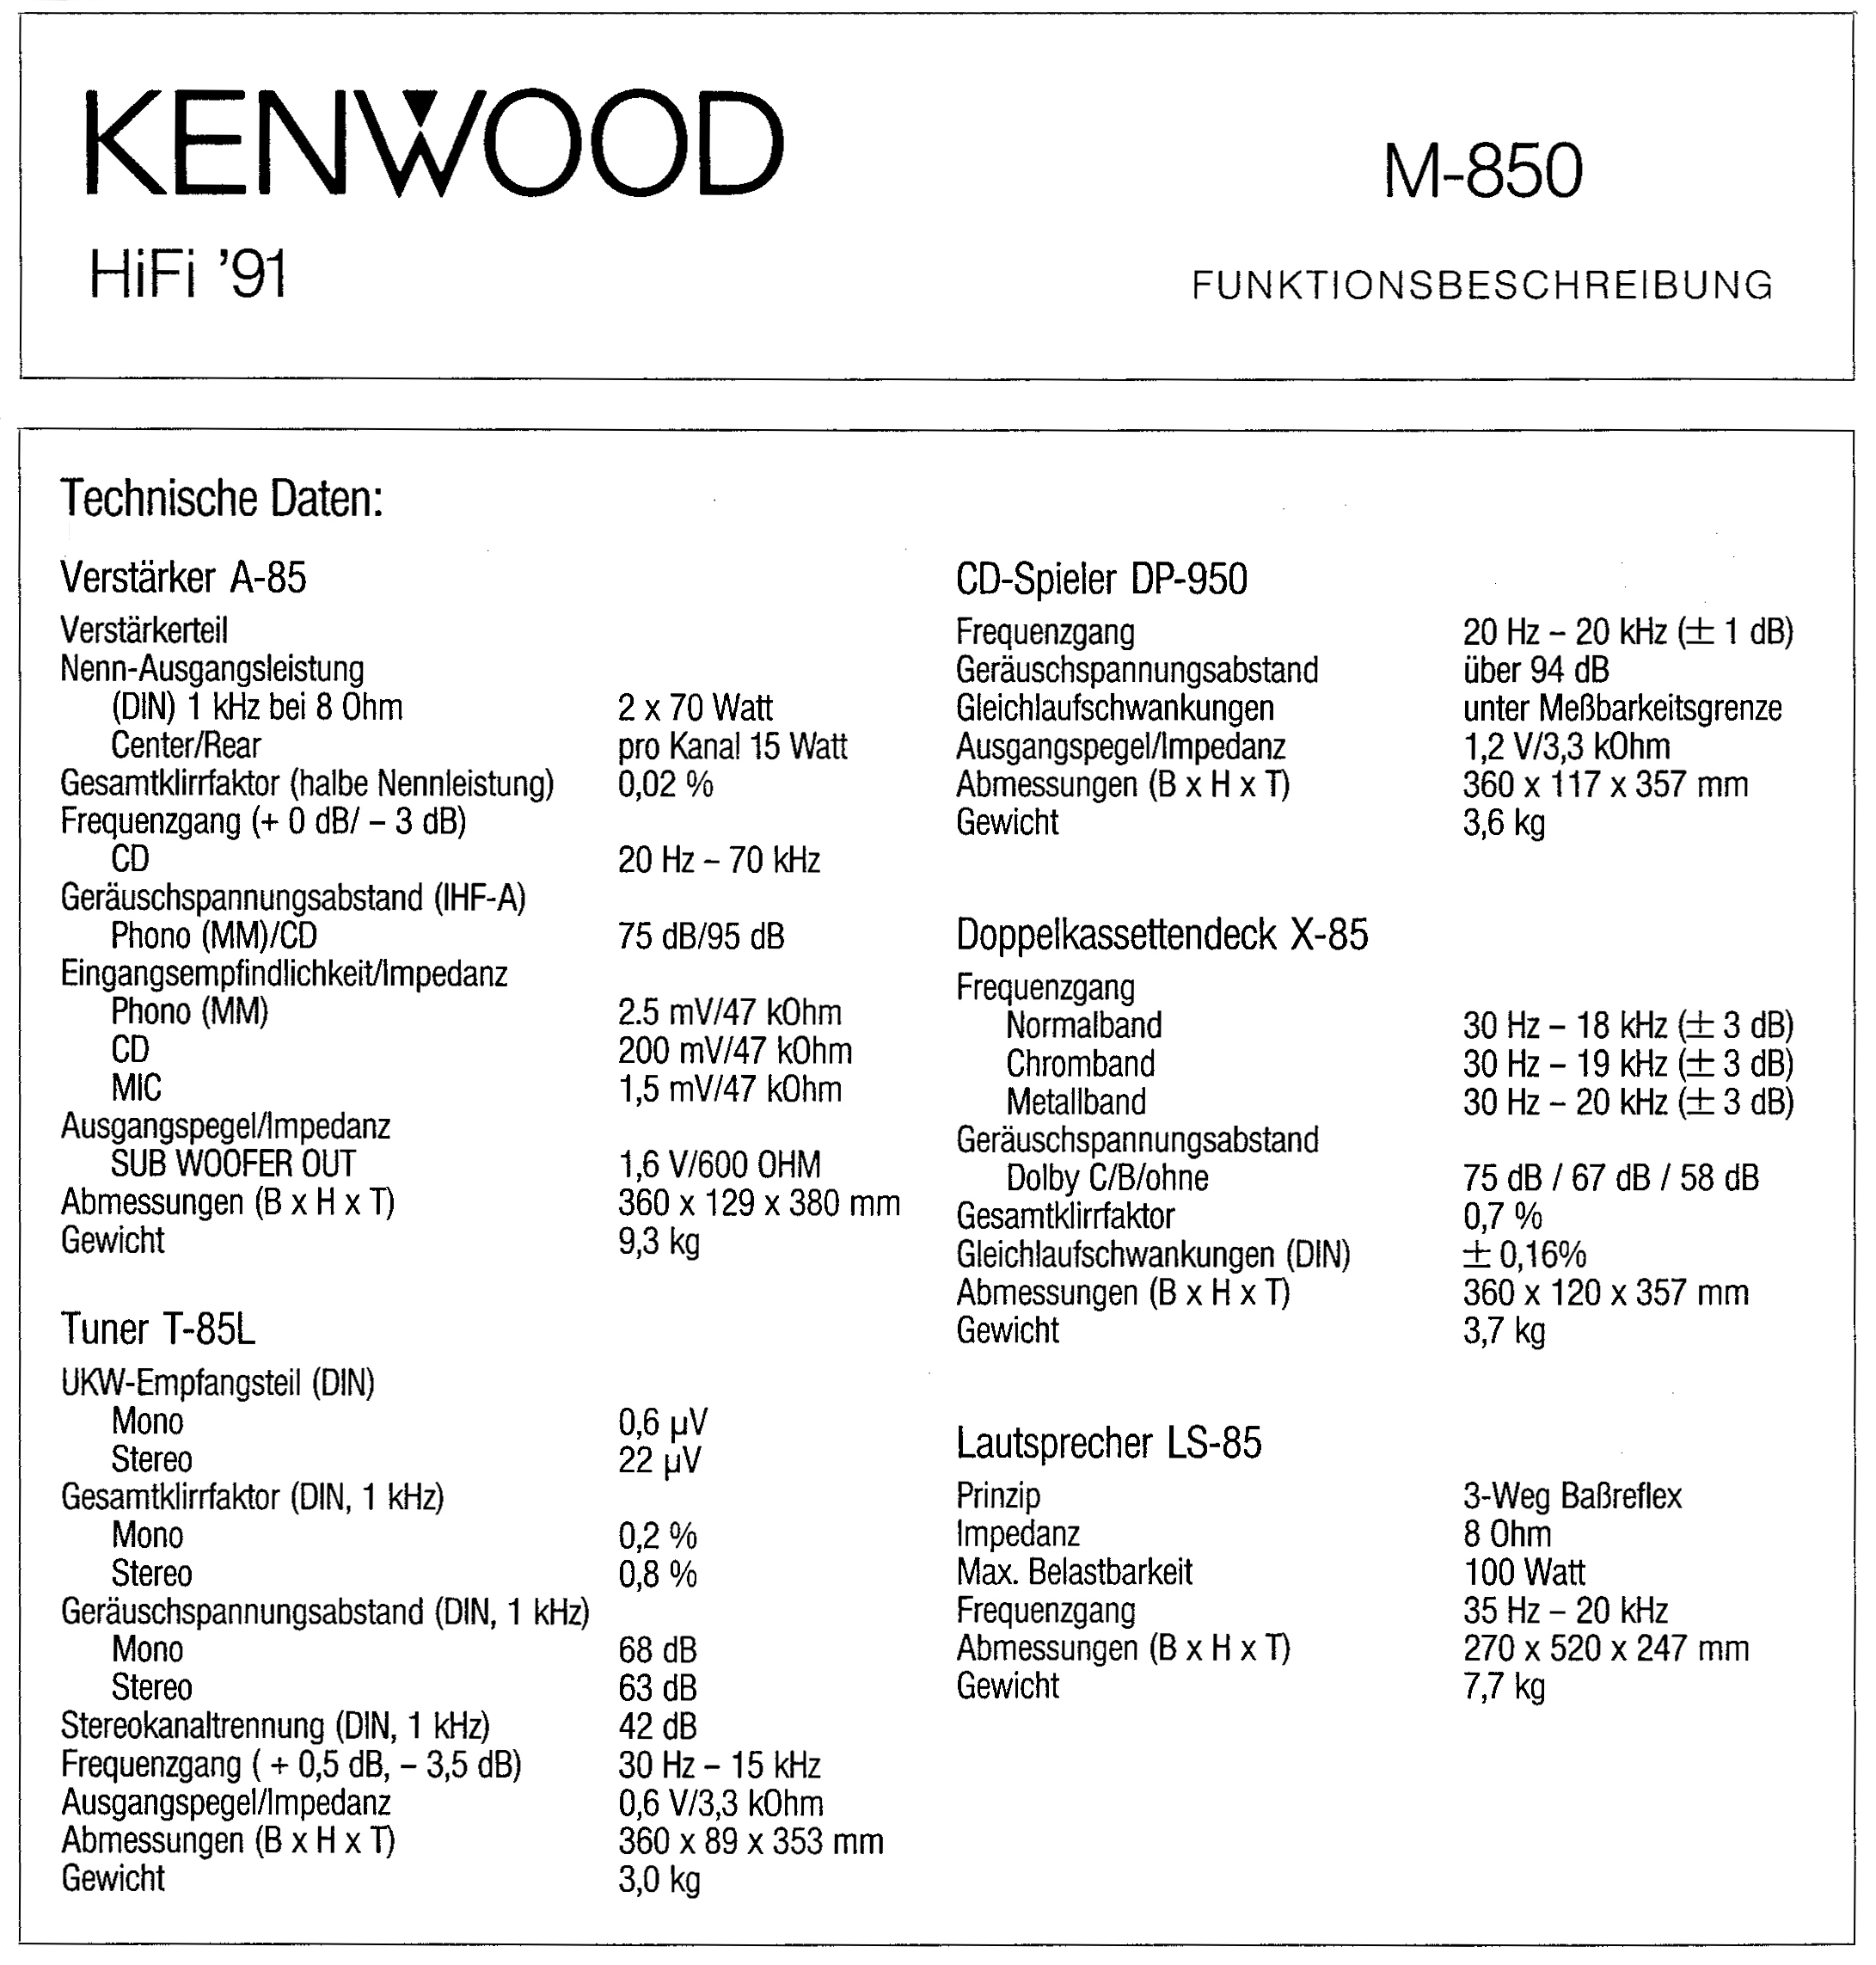 Kenwood M-850-Daten-1991.jpg